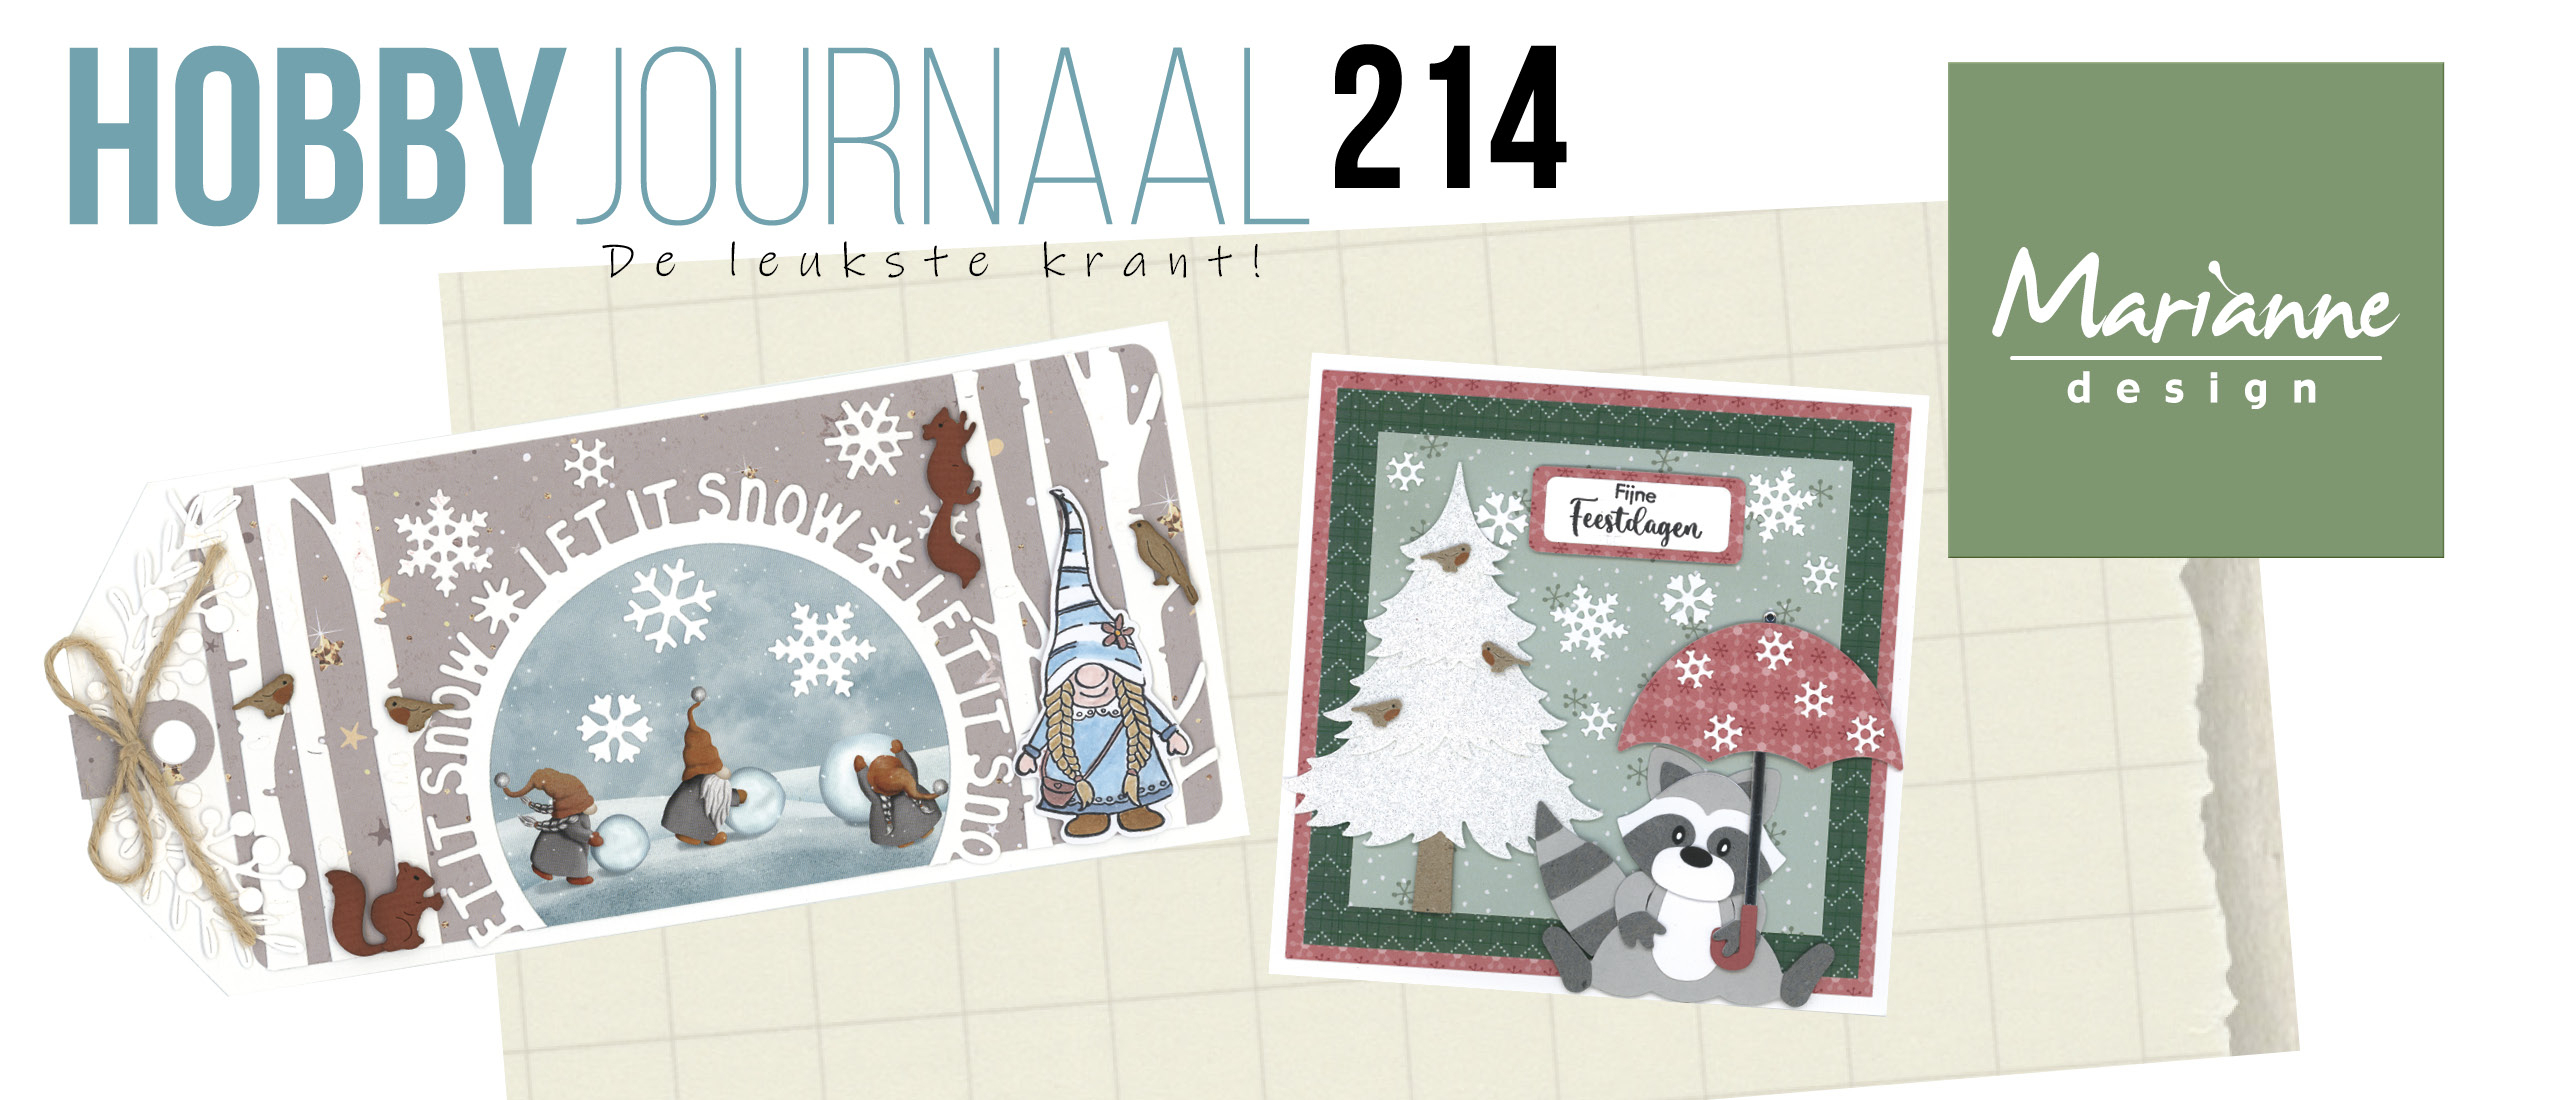 Marianne Design in kerst-en wintersfeer in Hobbyjournaal 214!